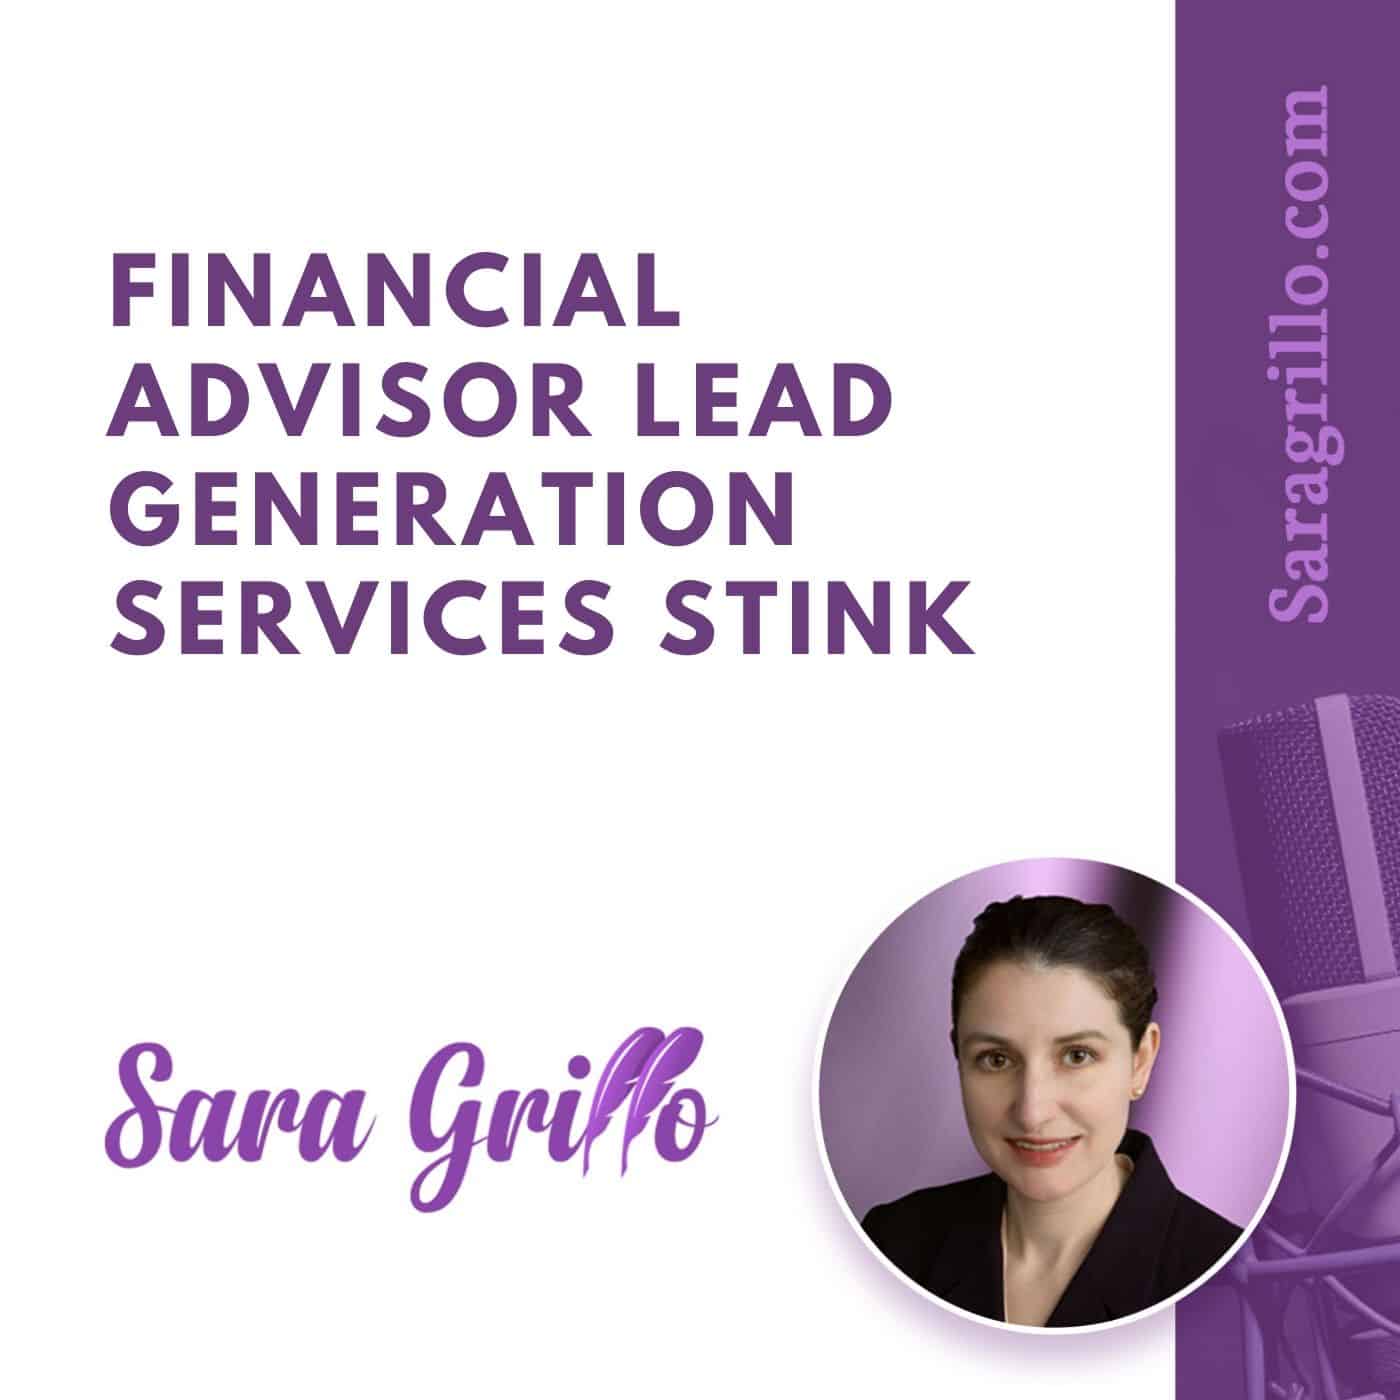 Financial advisor lead generation services stink!